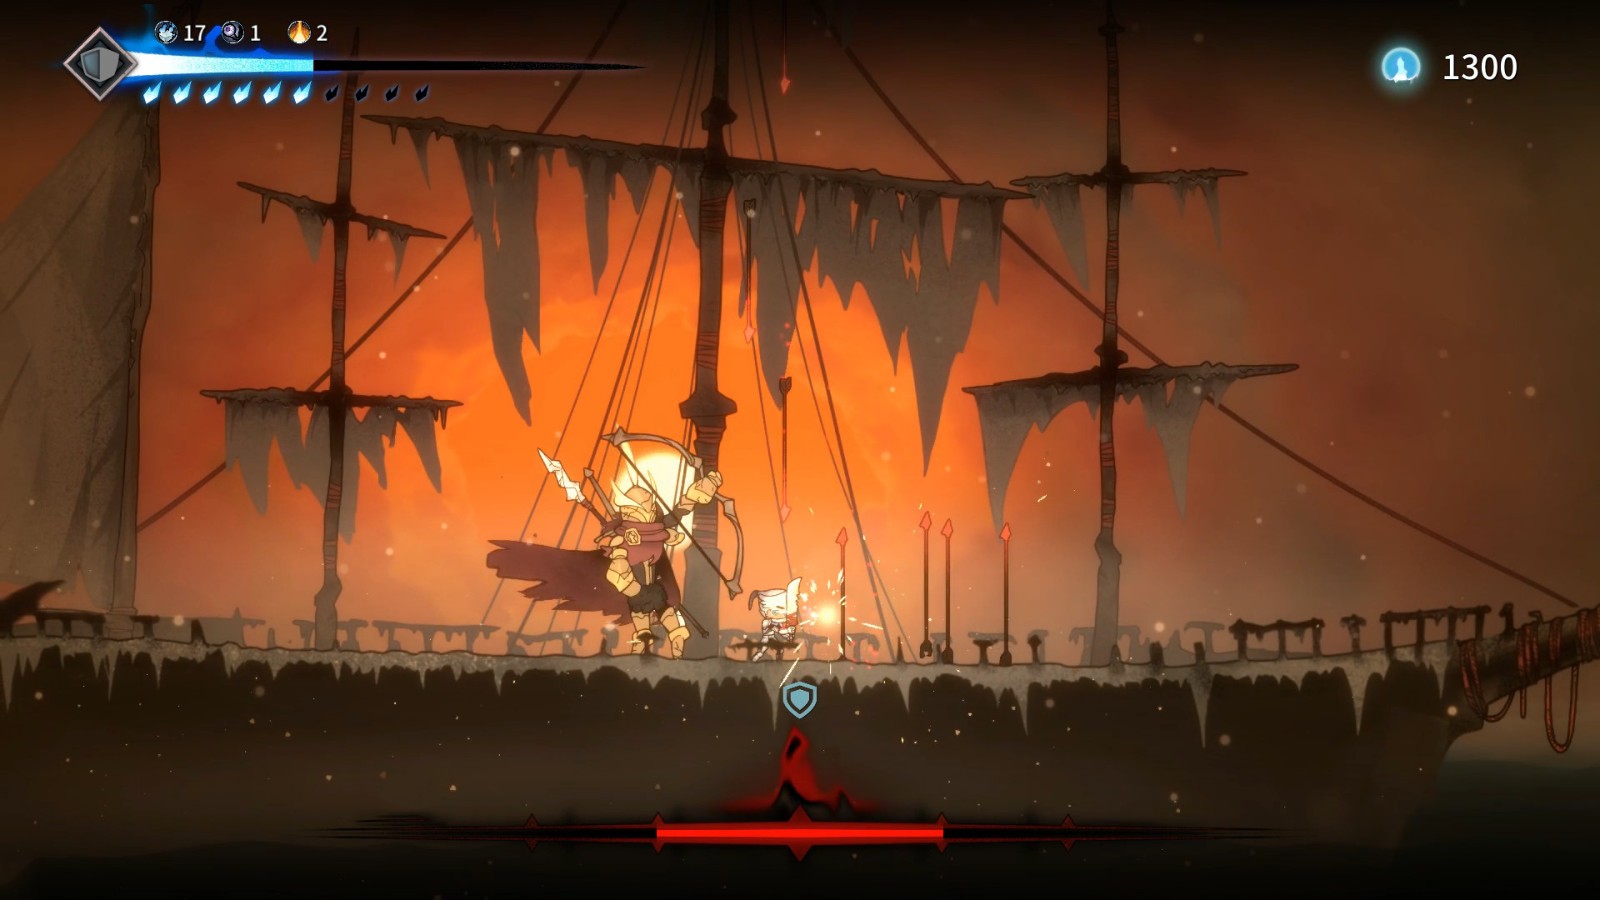 2D横板平台动作游戏《深沉之火》将于11月30日正式发售